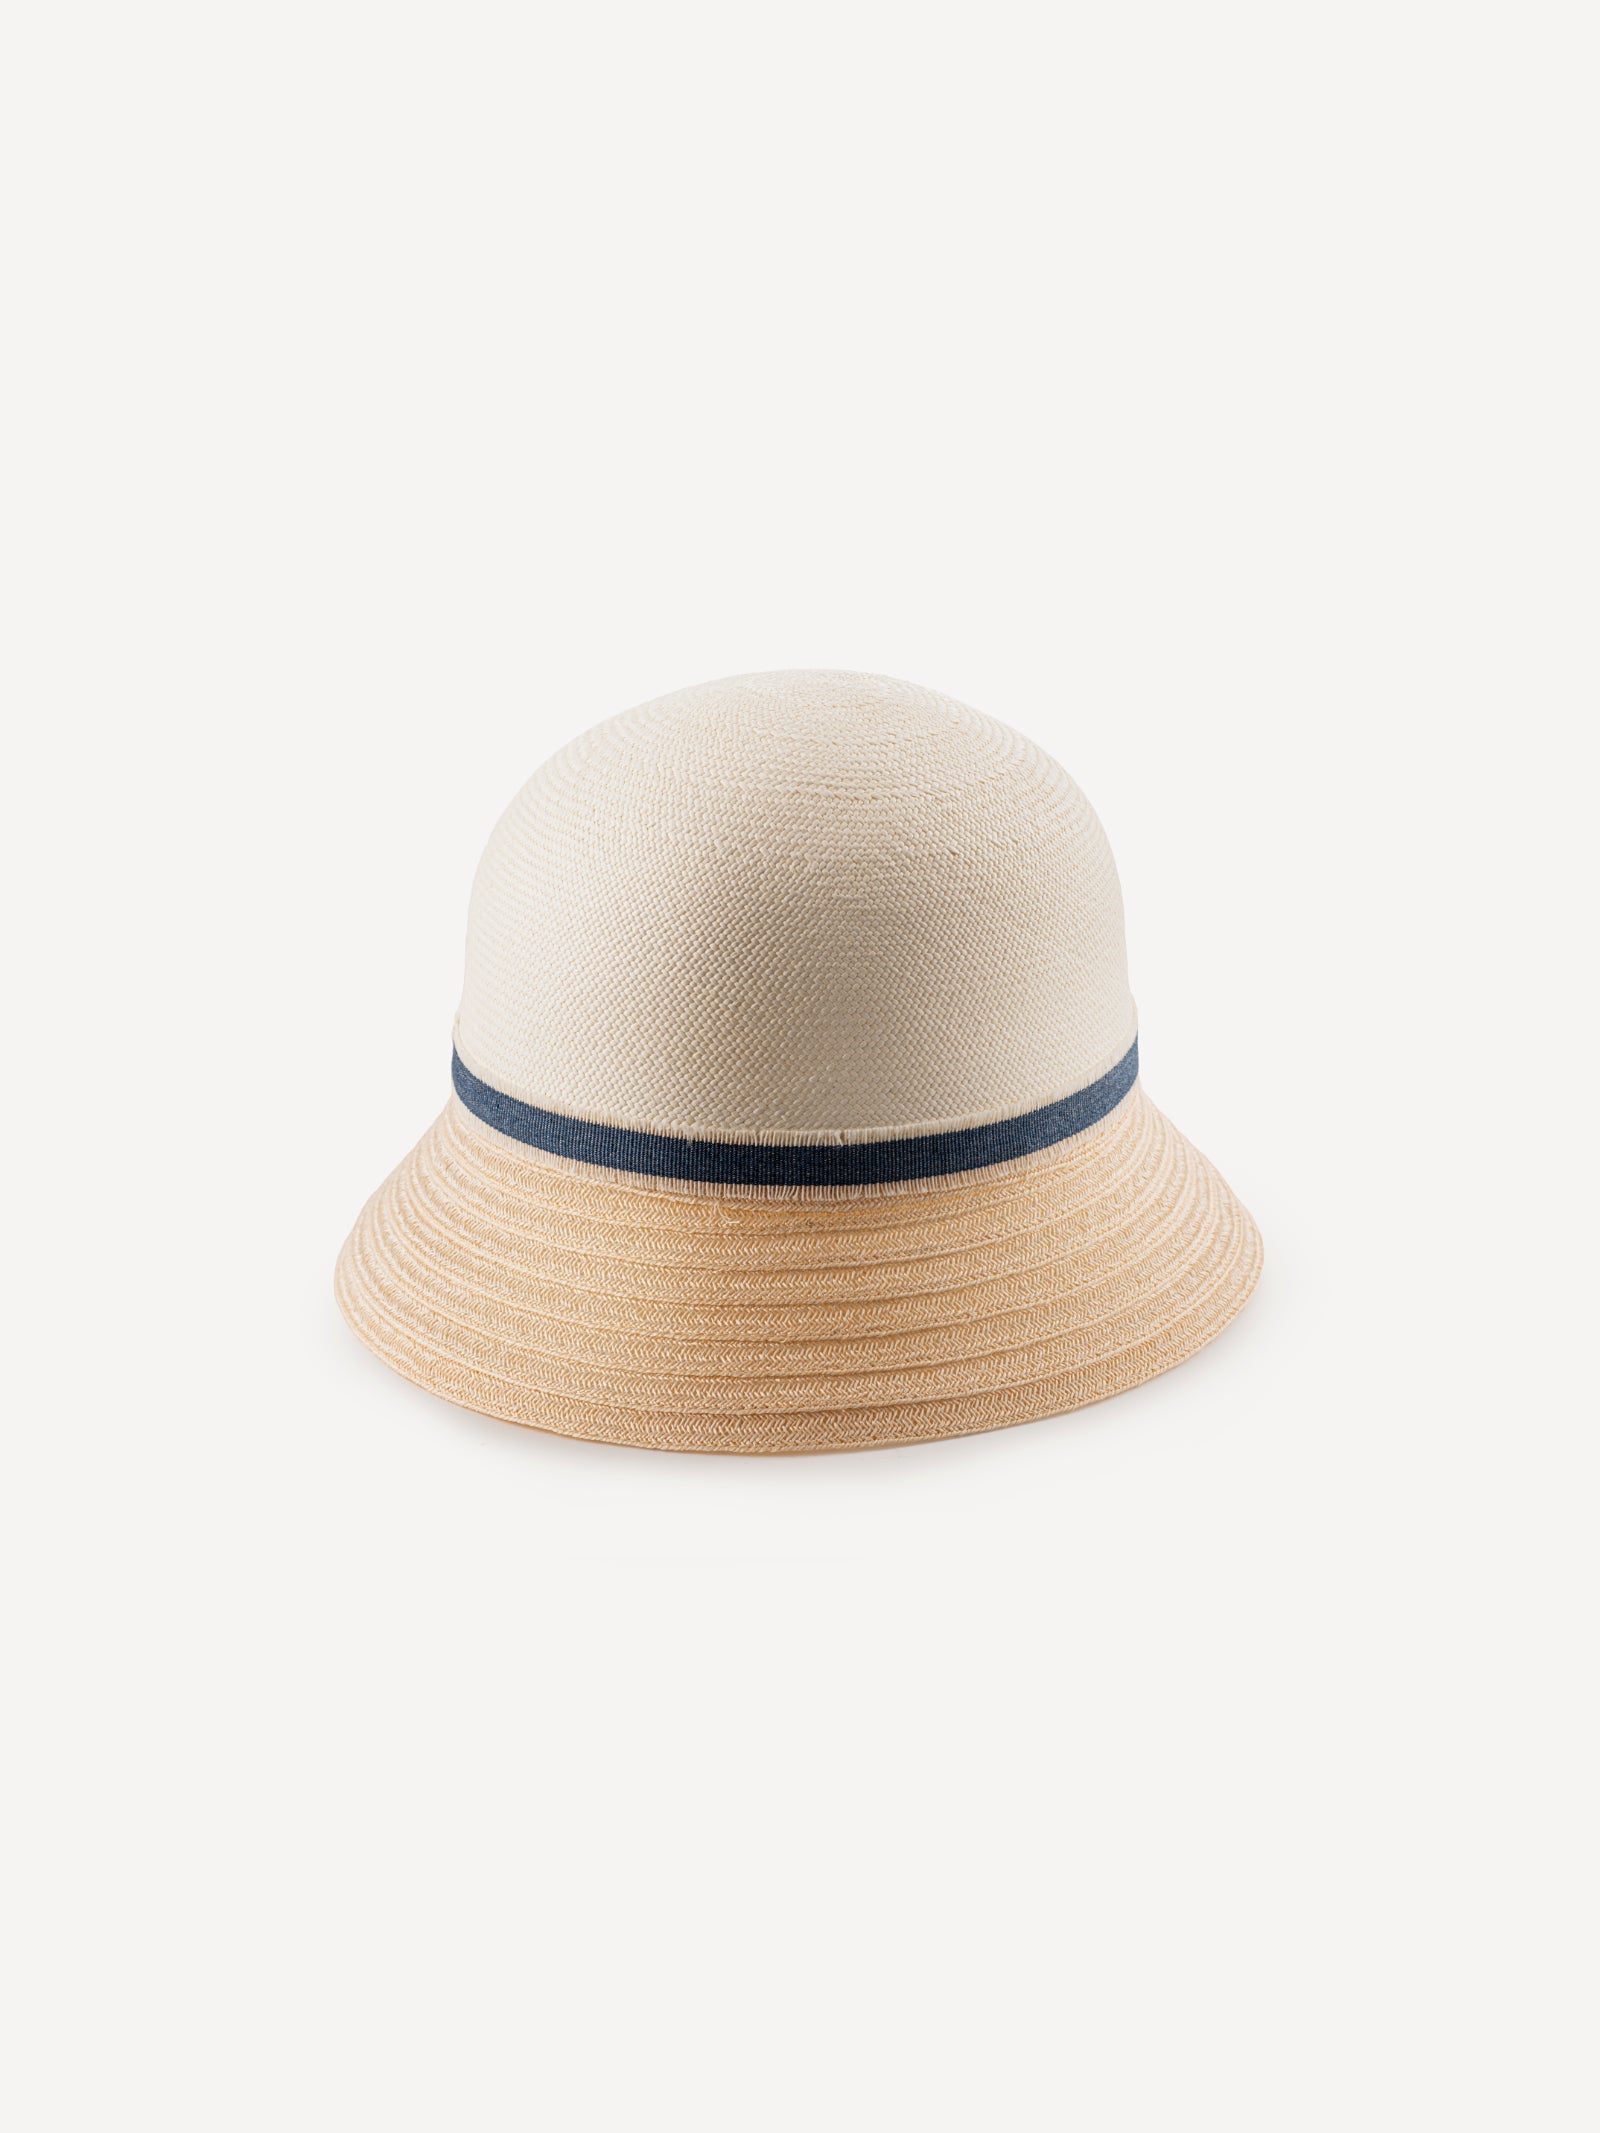 Cloche Bon Gros 100% Capri blue straw hat